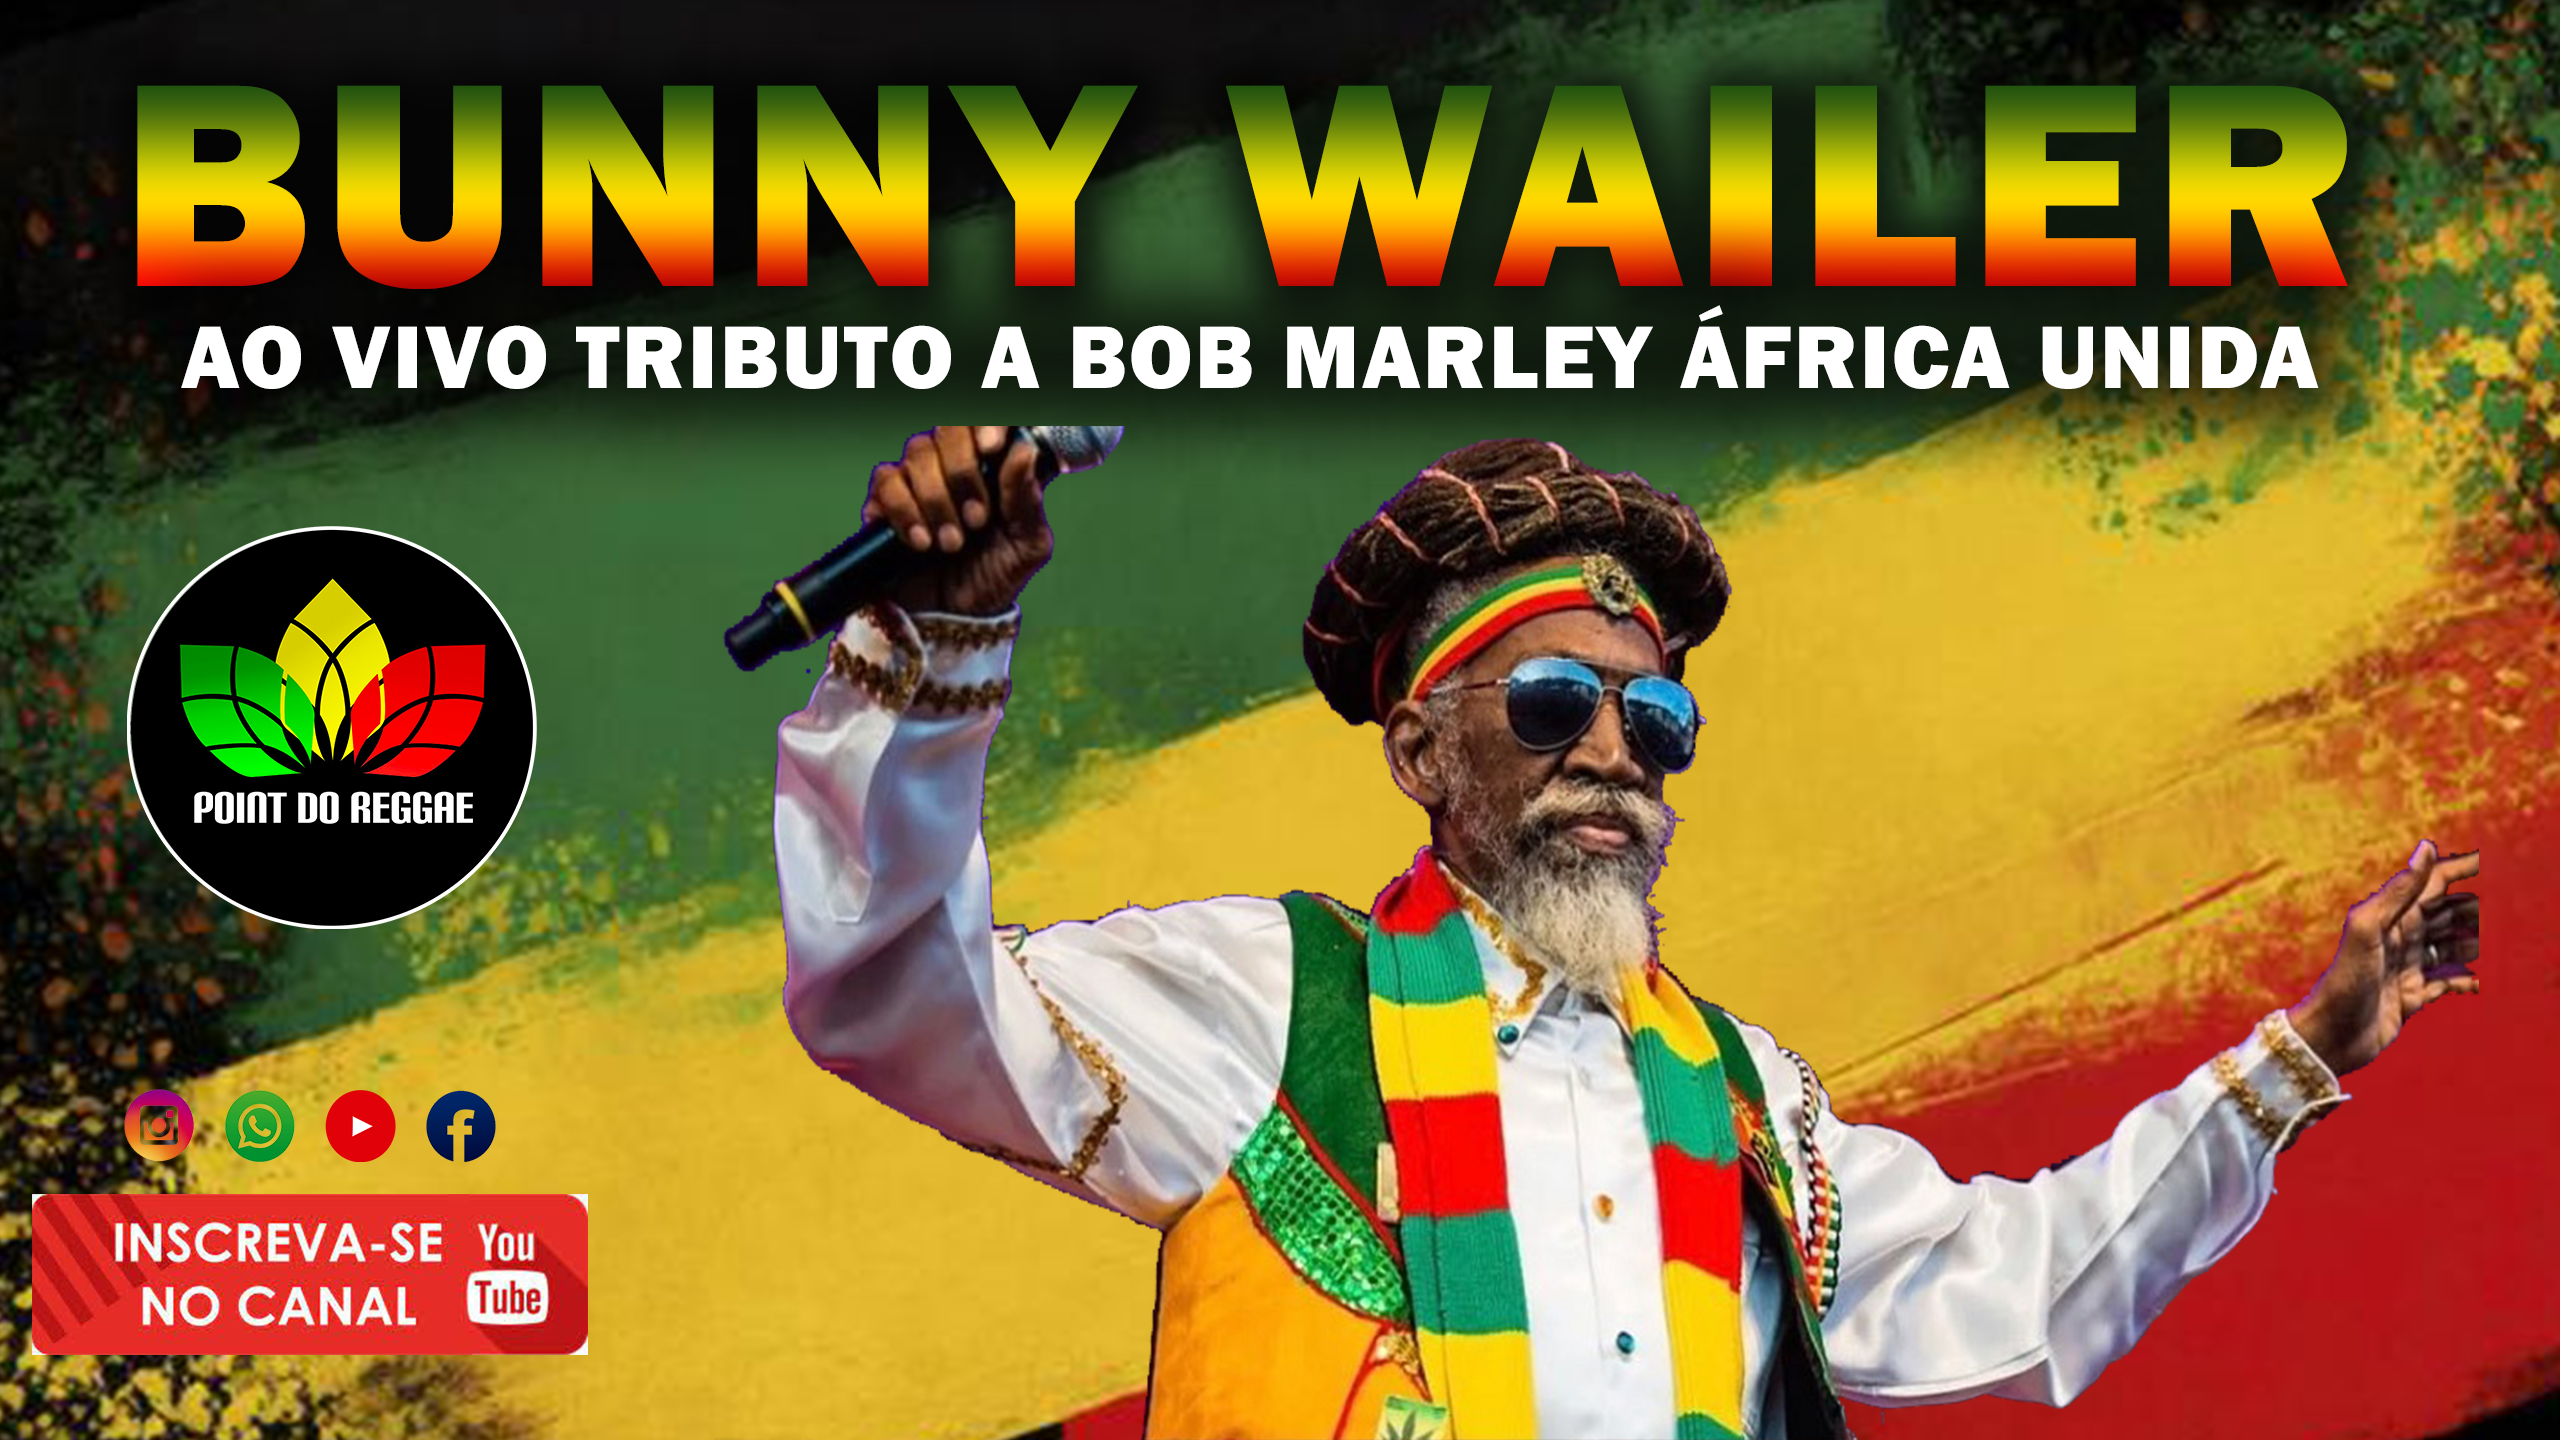 BUNNY WAILER tributo a Bob Marley